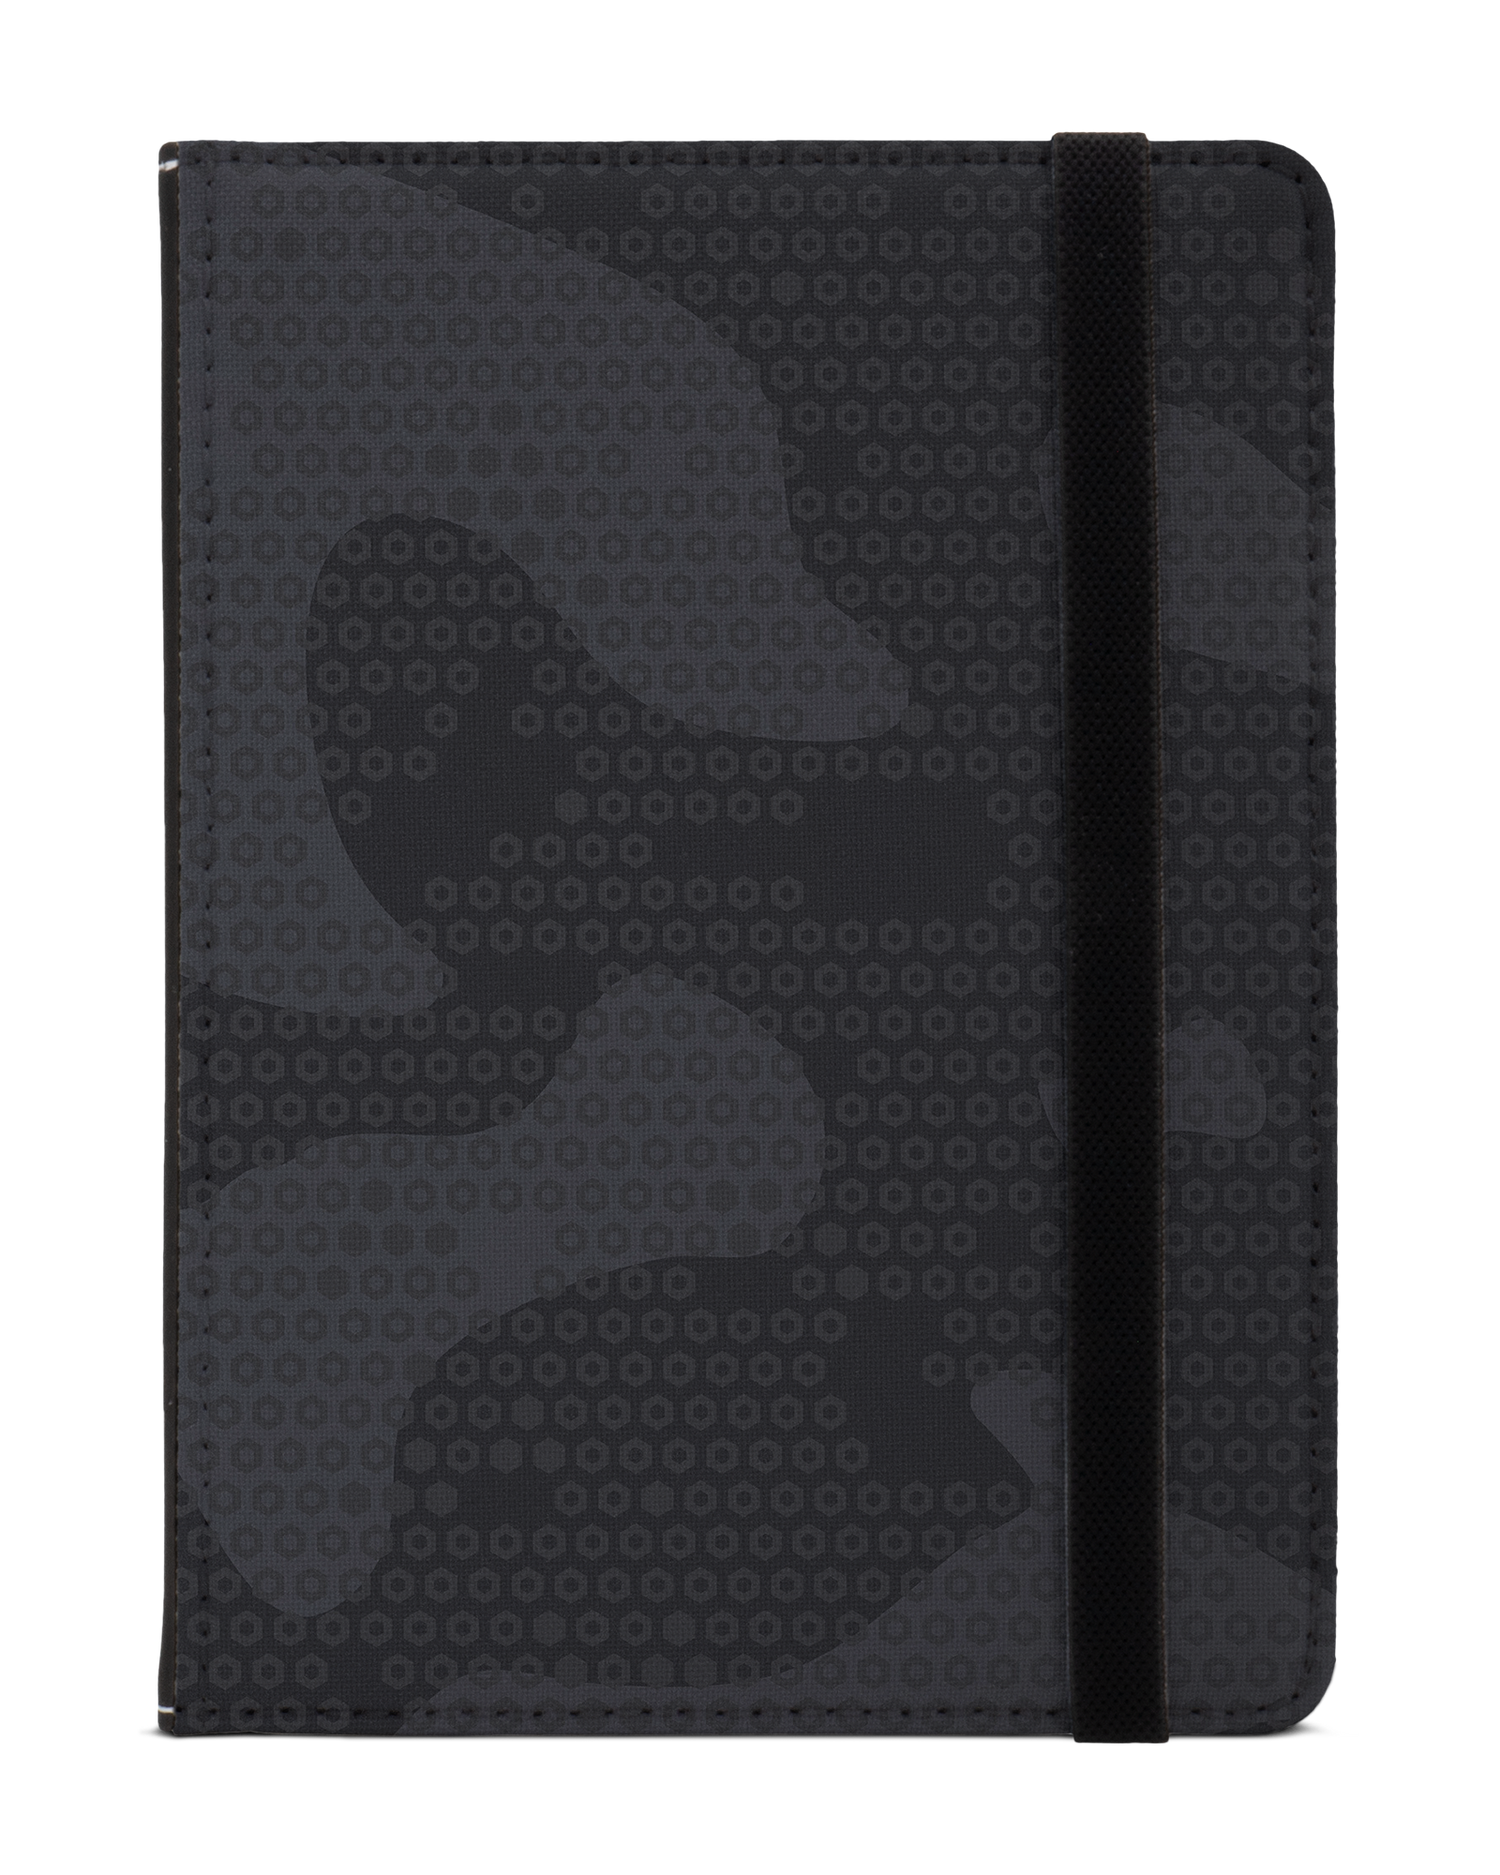 Spec Ops Dark eReader Case XS: Front View